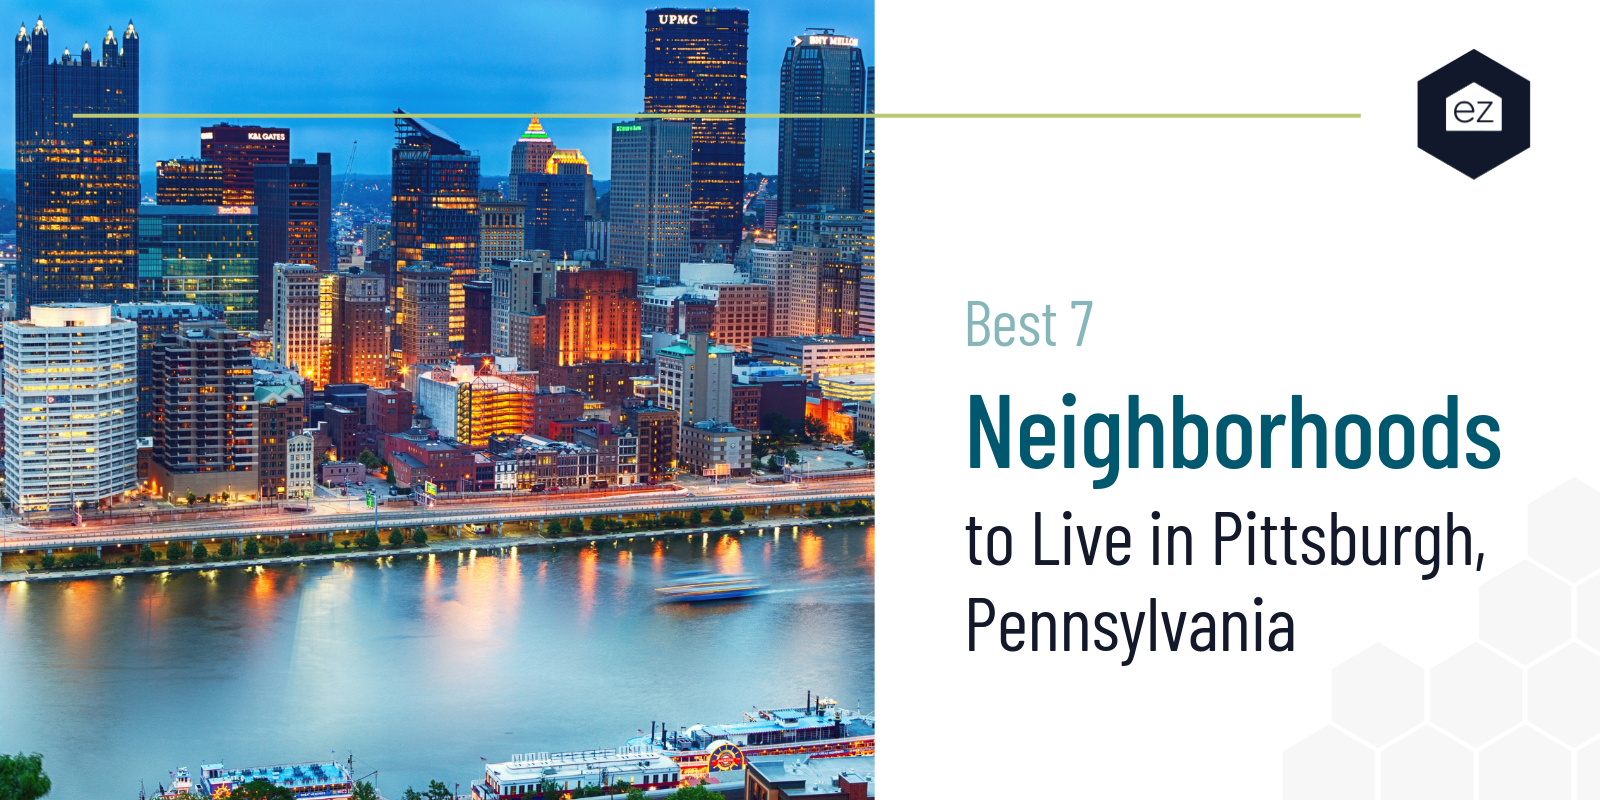 City of Pittsburgh, Pennsylvania